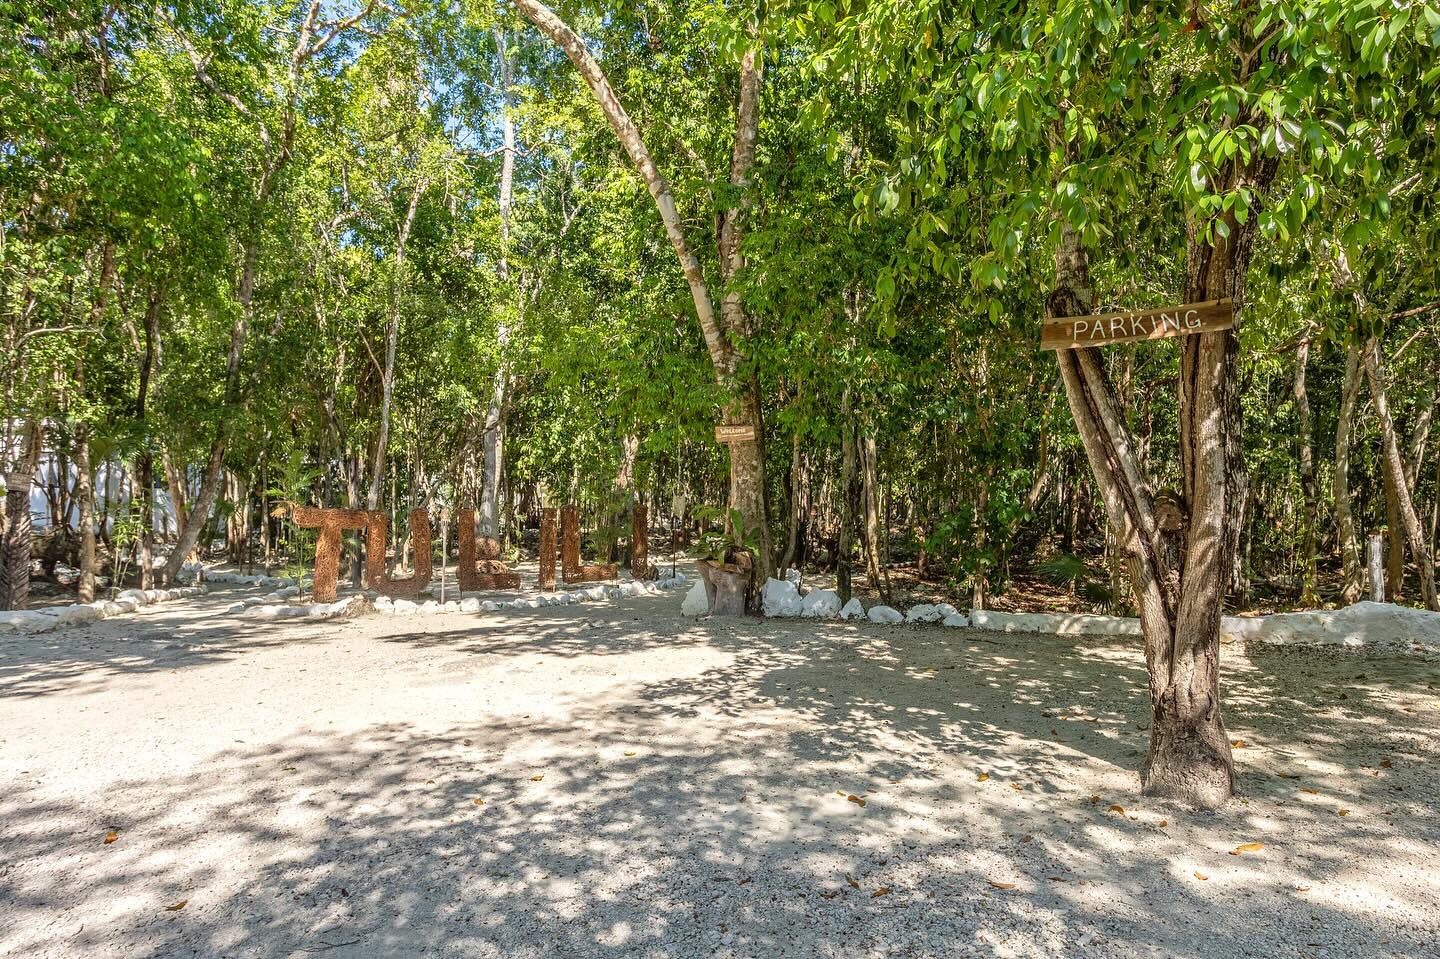 The gateway to our little piece of jungle paradise.

Inquire today to host your 2024 retreat with us!

Info@tulilitulum.com - www.tulilitulum.com

-

#tulum #tulummexico #mexico #privatehome #ecofriendly #retreatvenue #healthiswealth #yoga #yogaretre